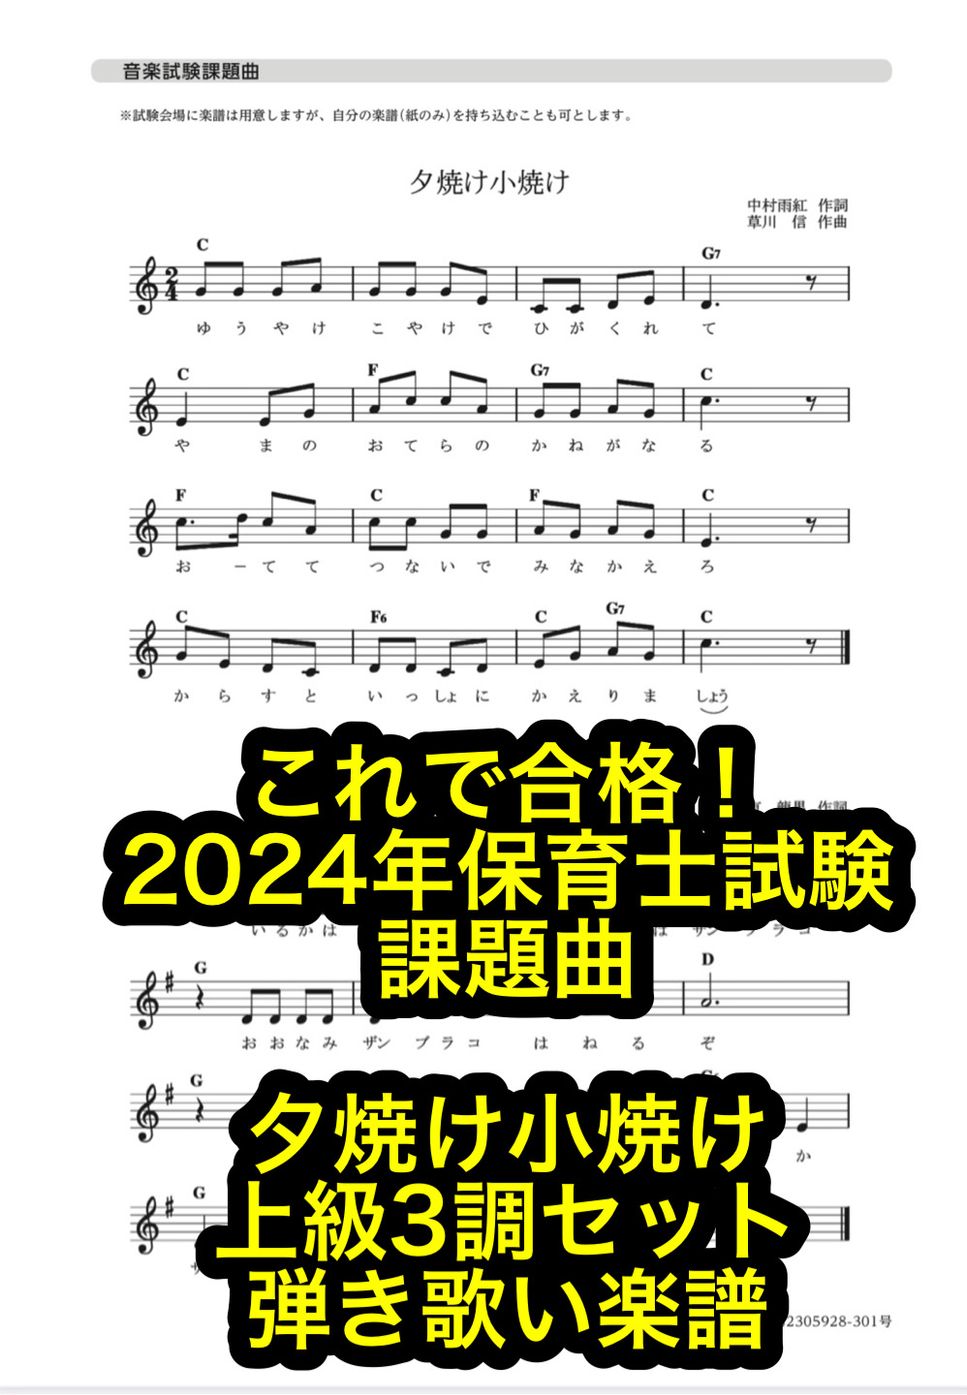 2024年保育士試験課題曲「夕焼け小焼け」上級セット 楽譜 By 森田正徳